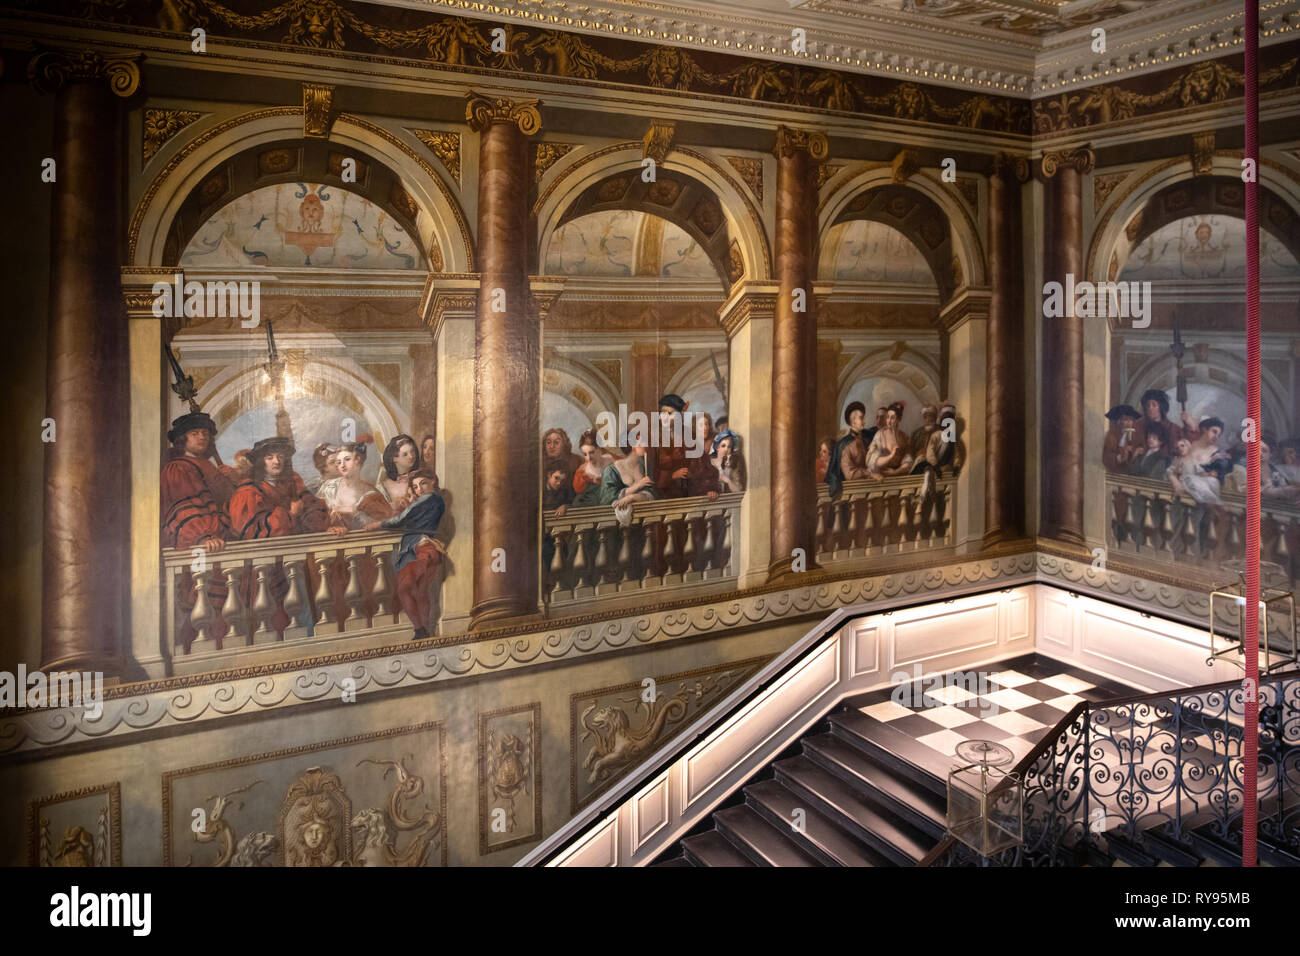 The King S Staircase Inside Kensington Palace London Uk